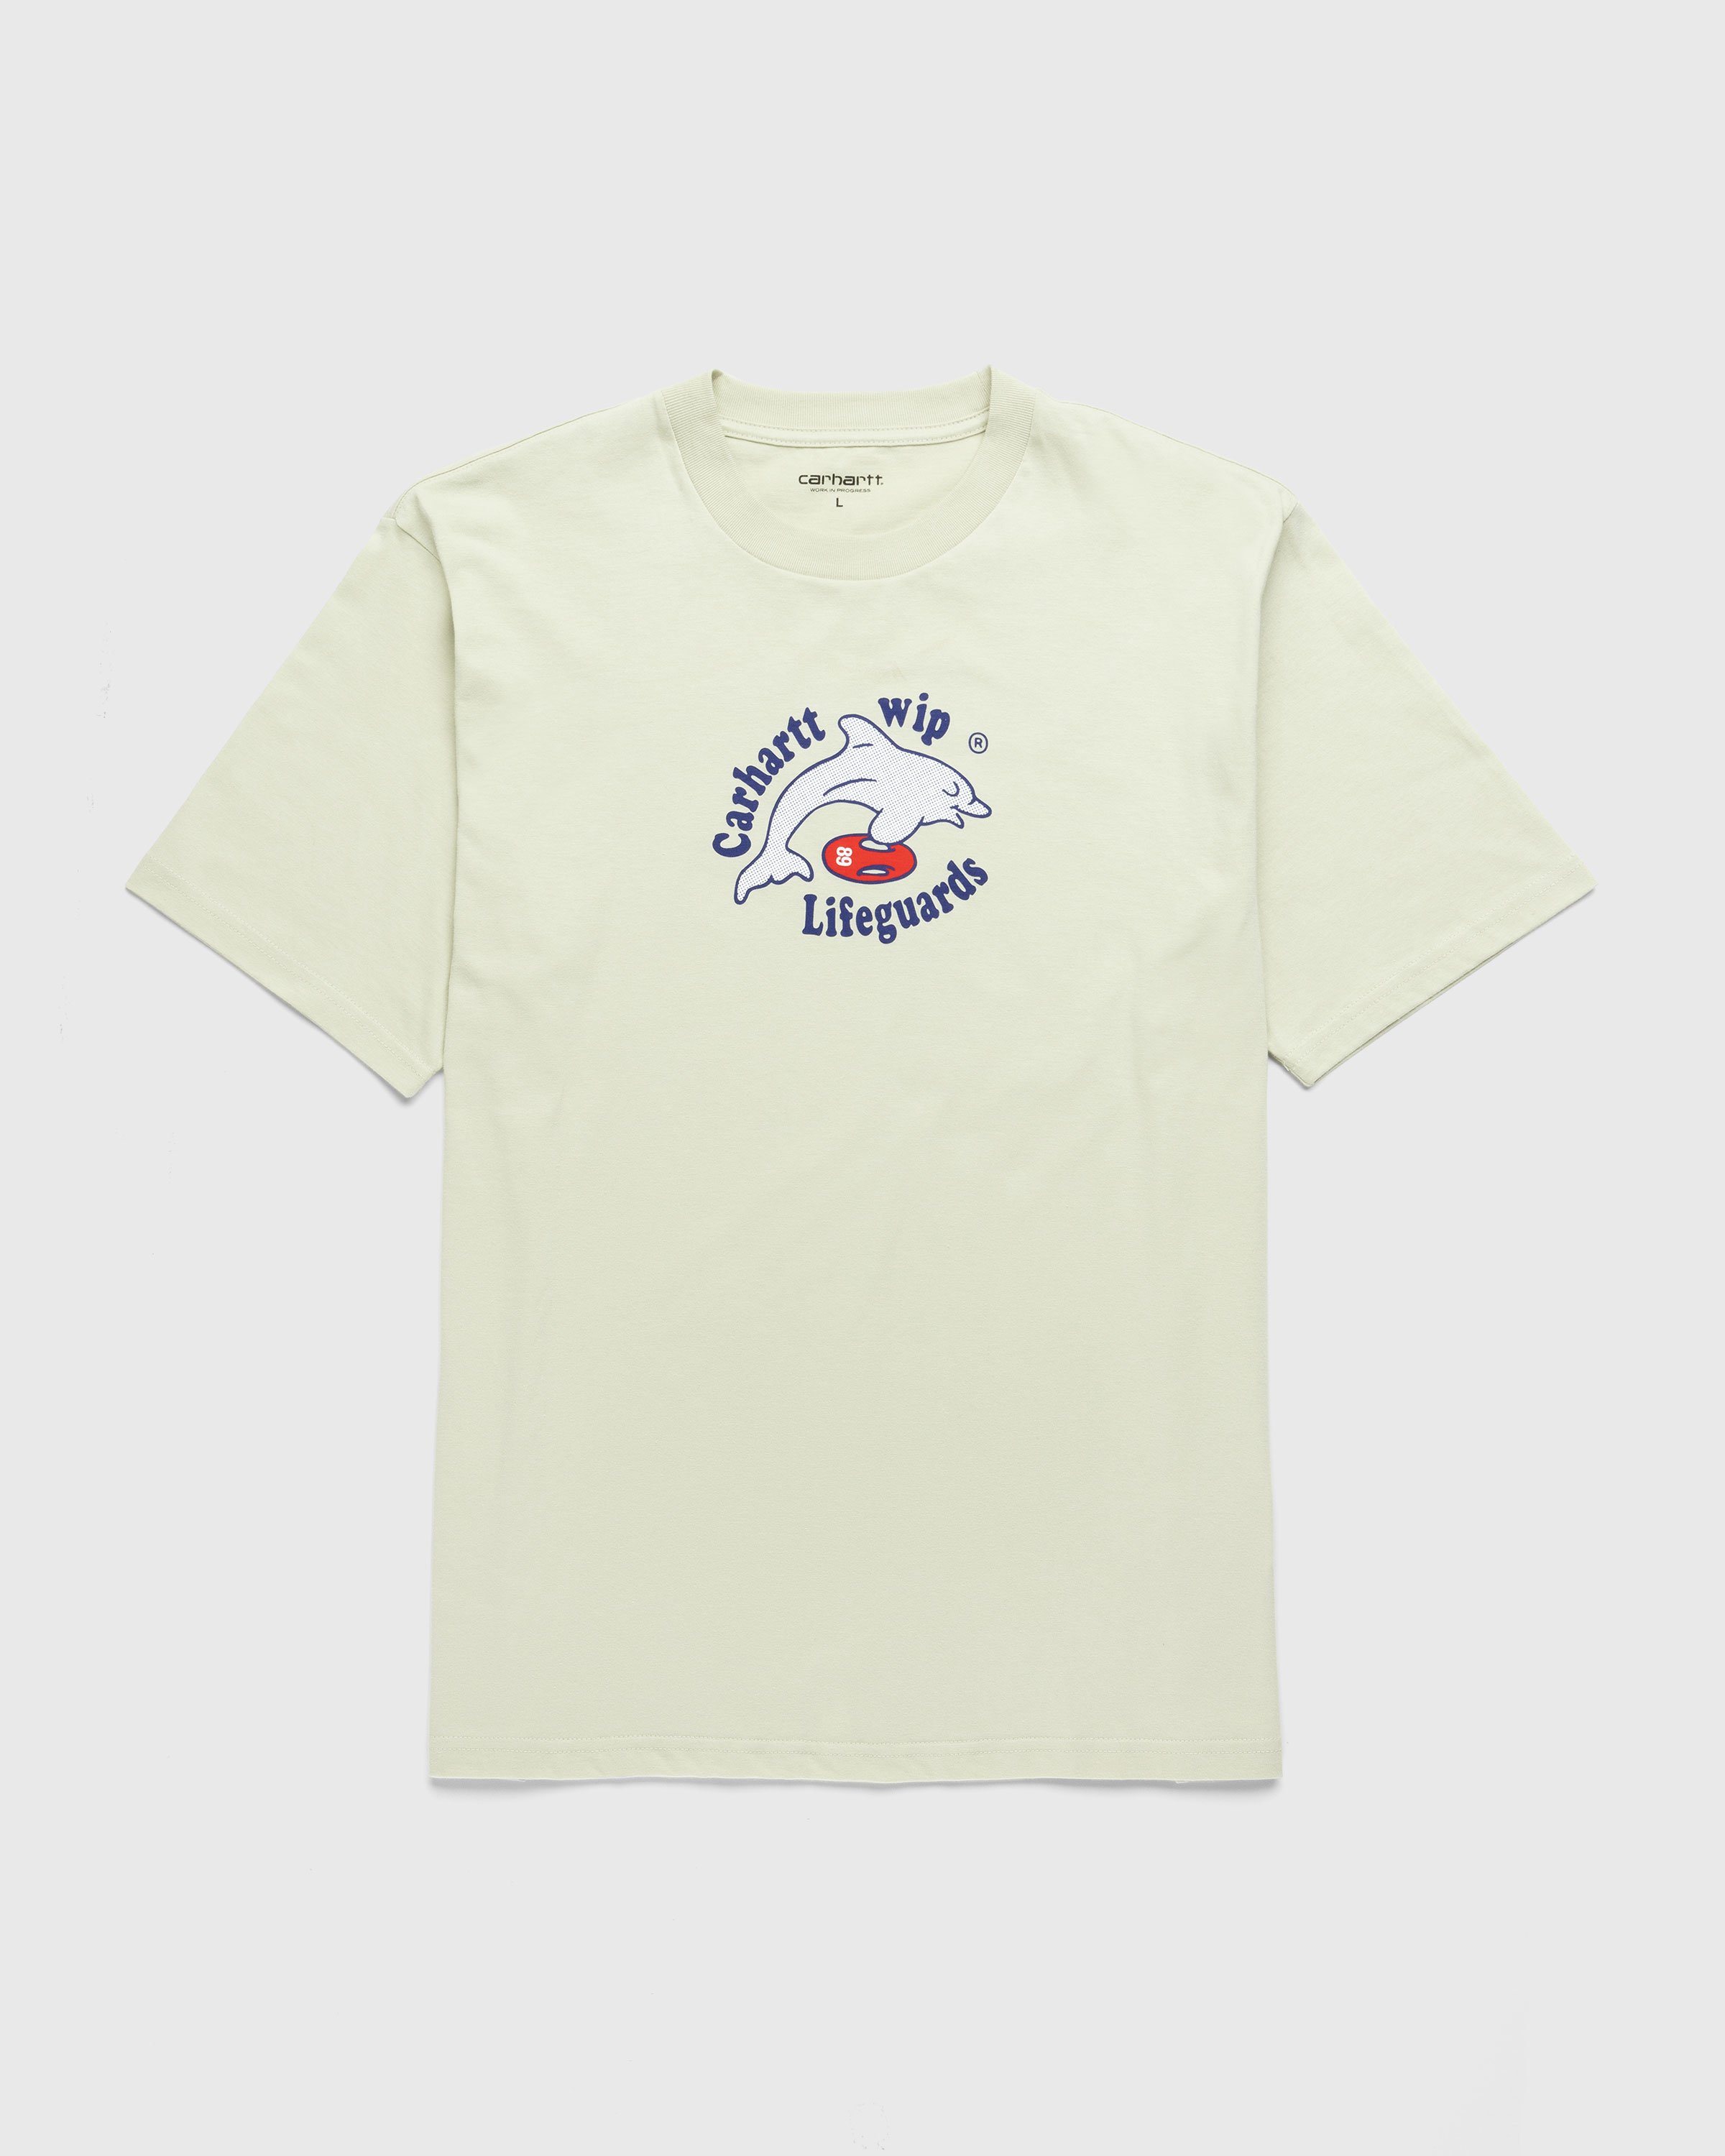 Carhartt WIP - Lifeguards T-Shirt Light Blue - Clothing - White - Image 1